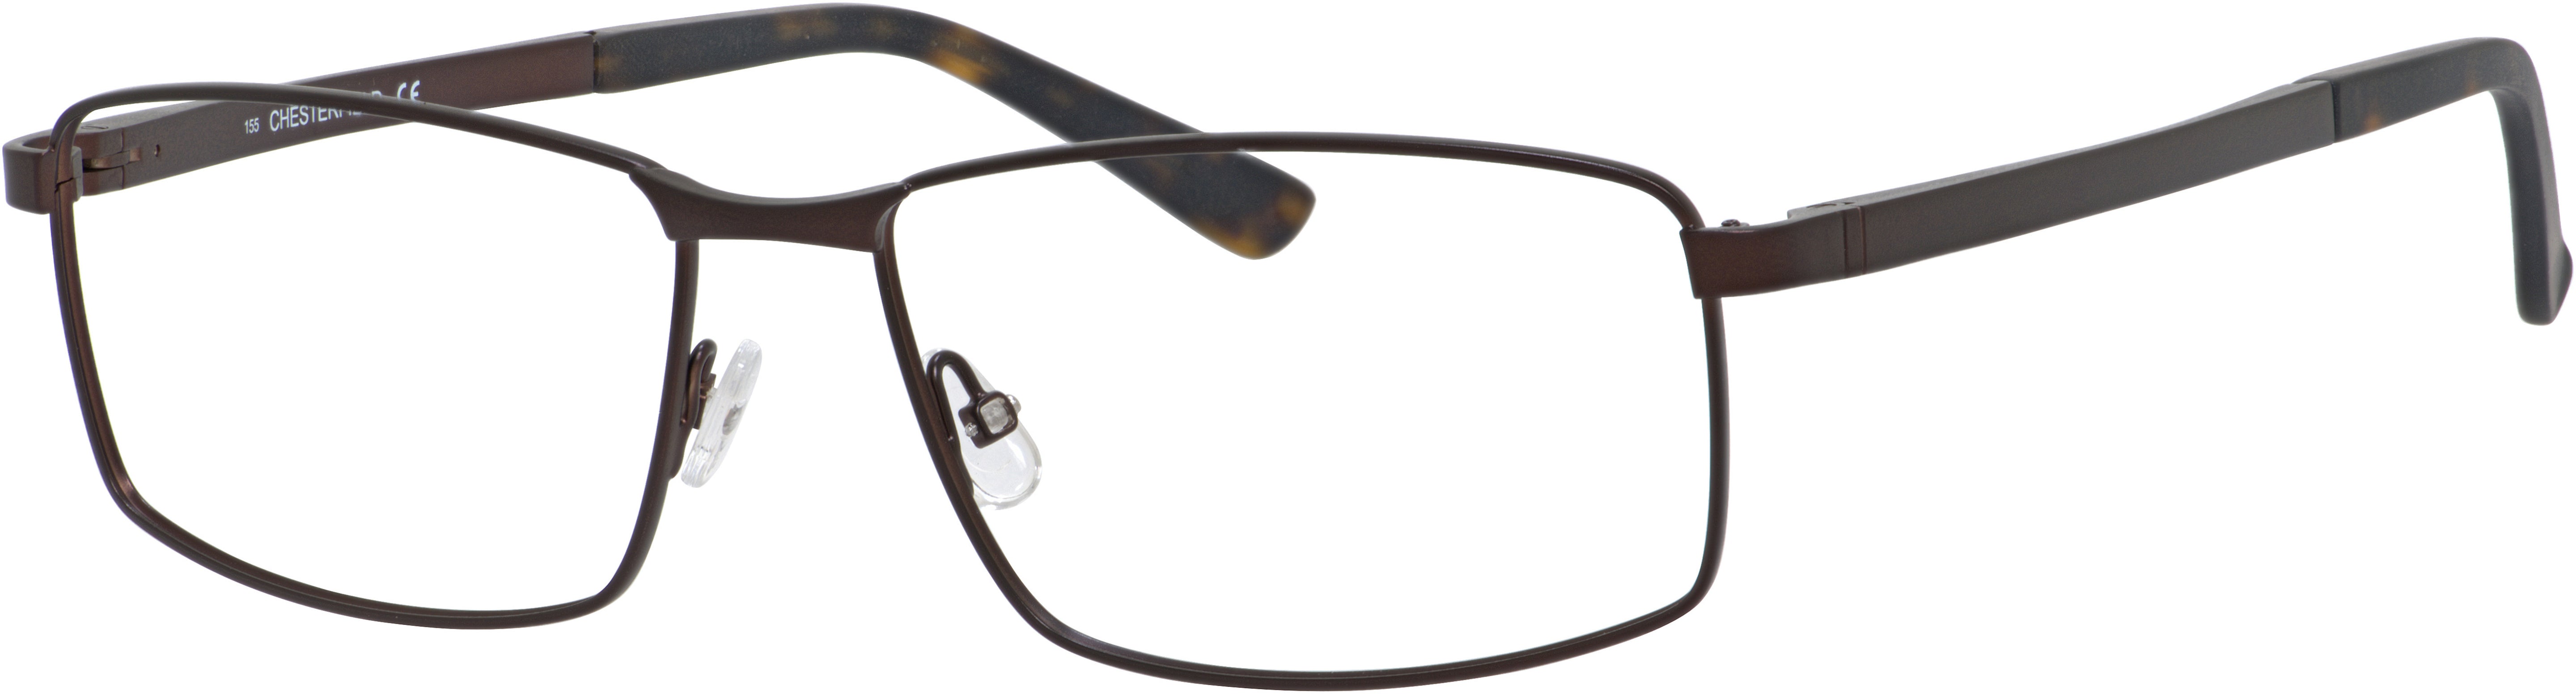  Chesterfield 56XL Rectangular Eyeglasses 0R0Z-0R0Z  Dark Brown (00 Demo Lens)